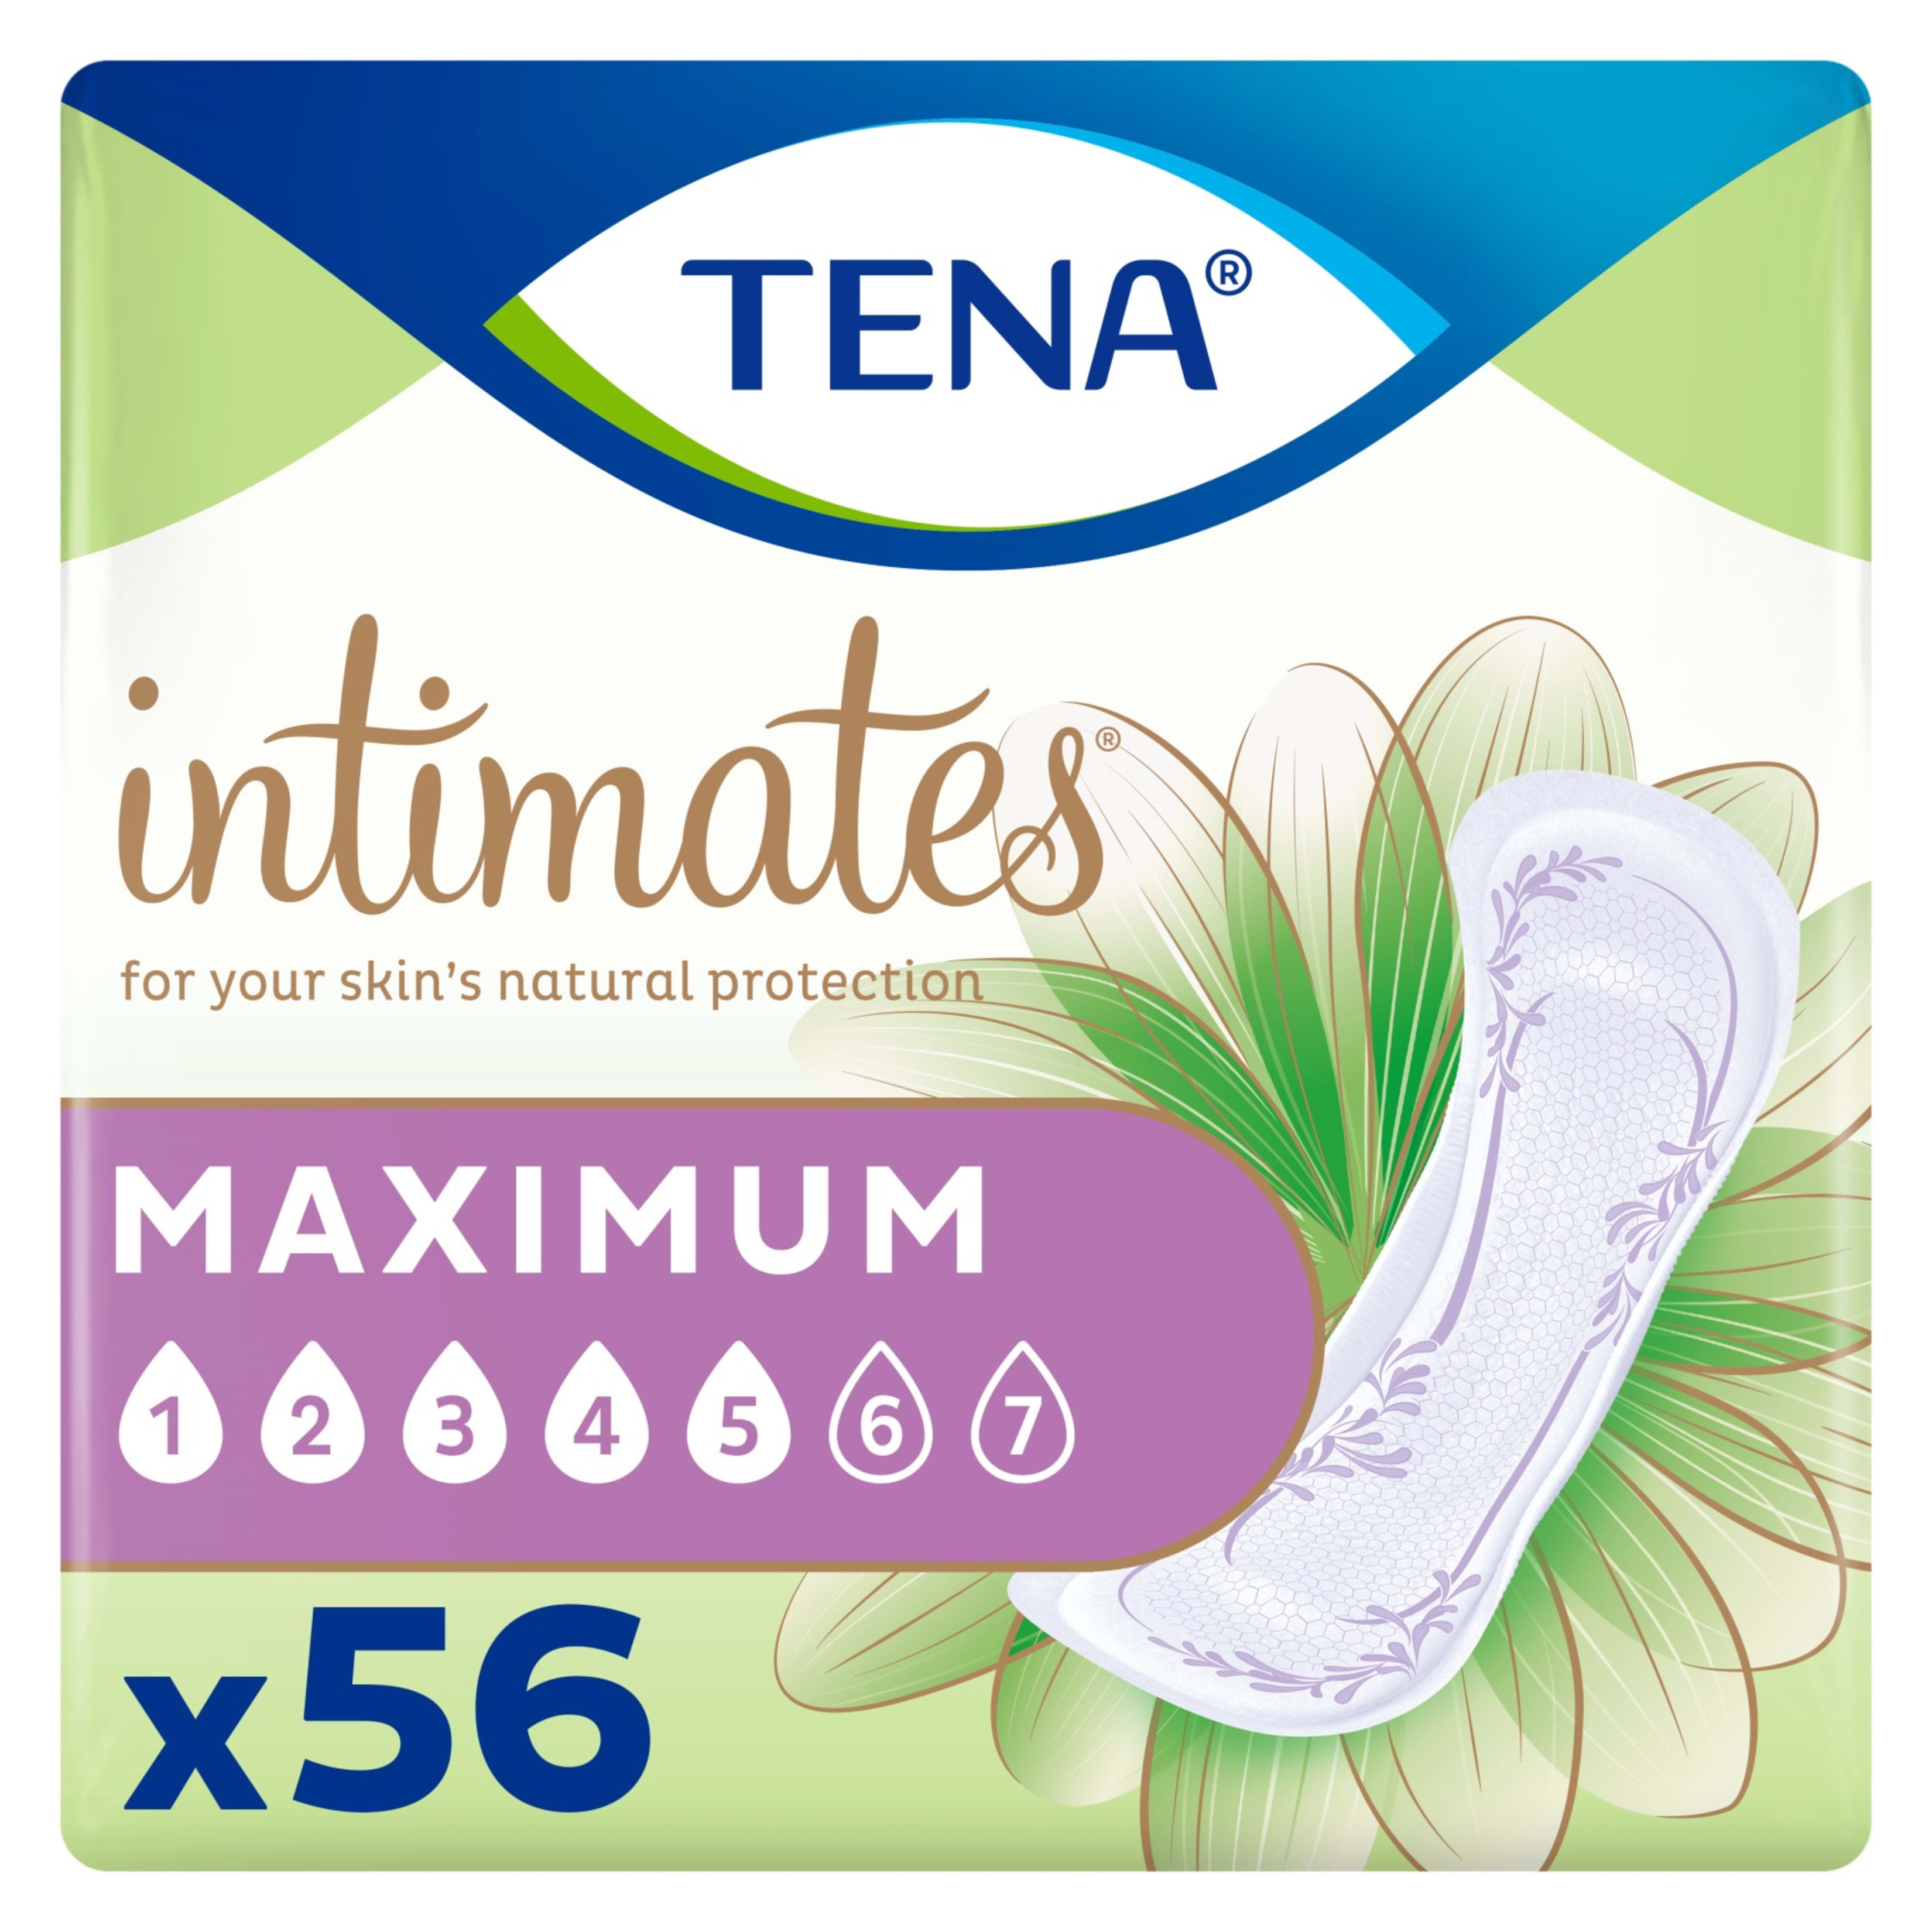 Tena Intimates Maximum Absorbency Incontinence Pad For Women 56 Ct Walmart Com